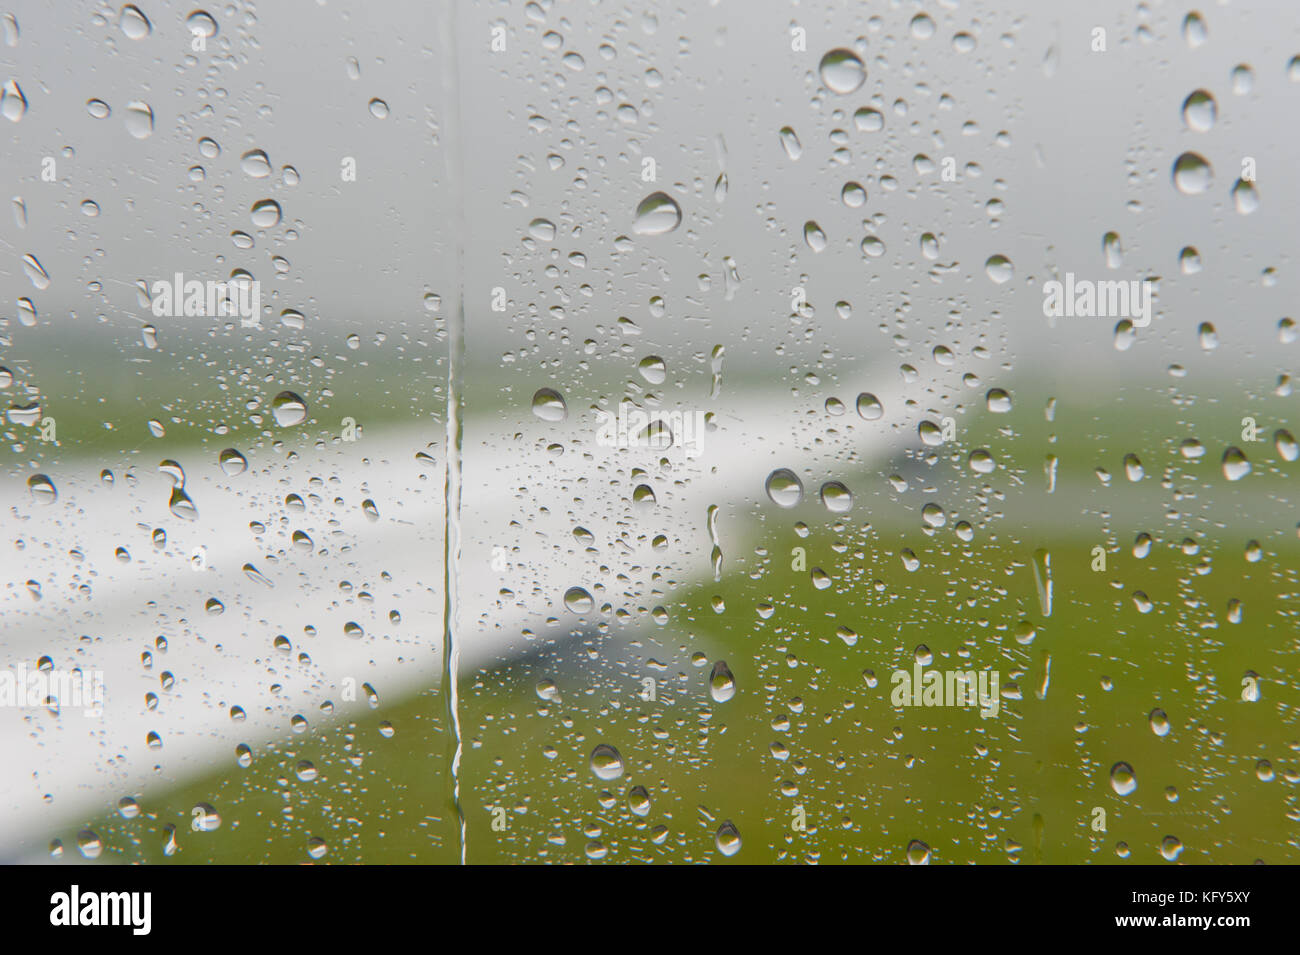 View through a window on airplane on rain weather Stock Photo